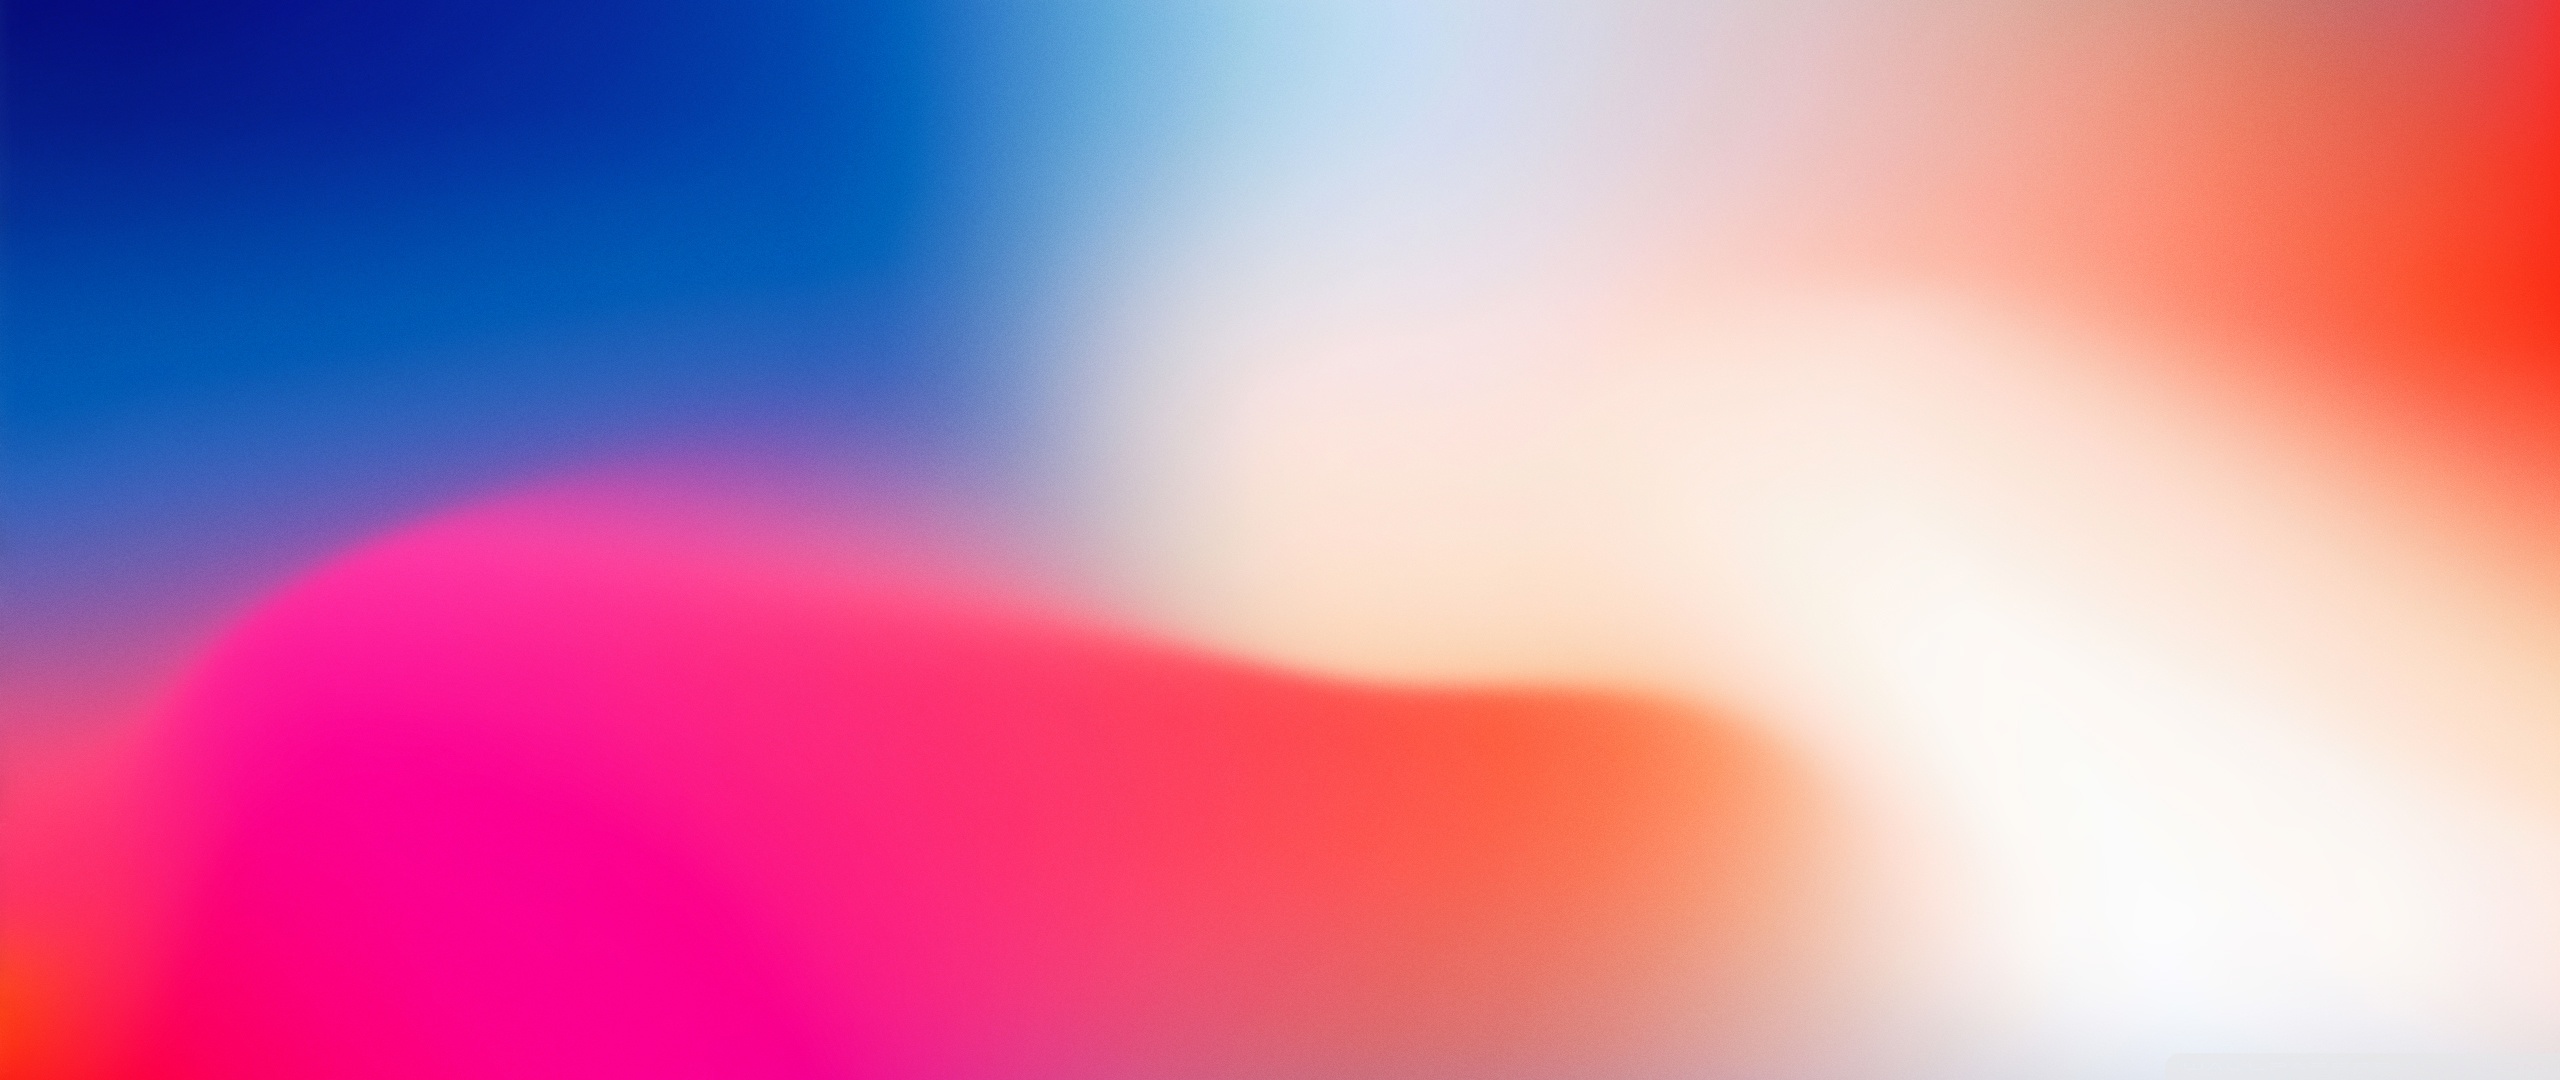 Download iPhone X Wallpaper for Mac OS UltraHD Wallpaper - Wallpapers ...